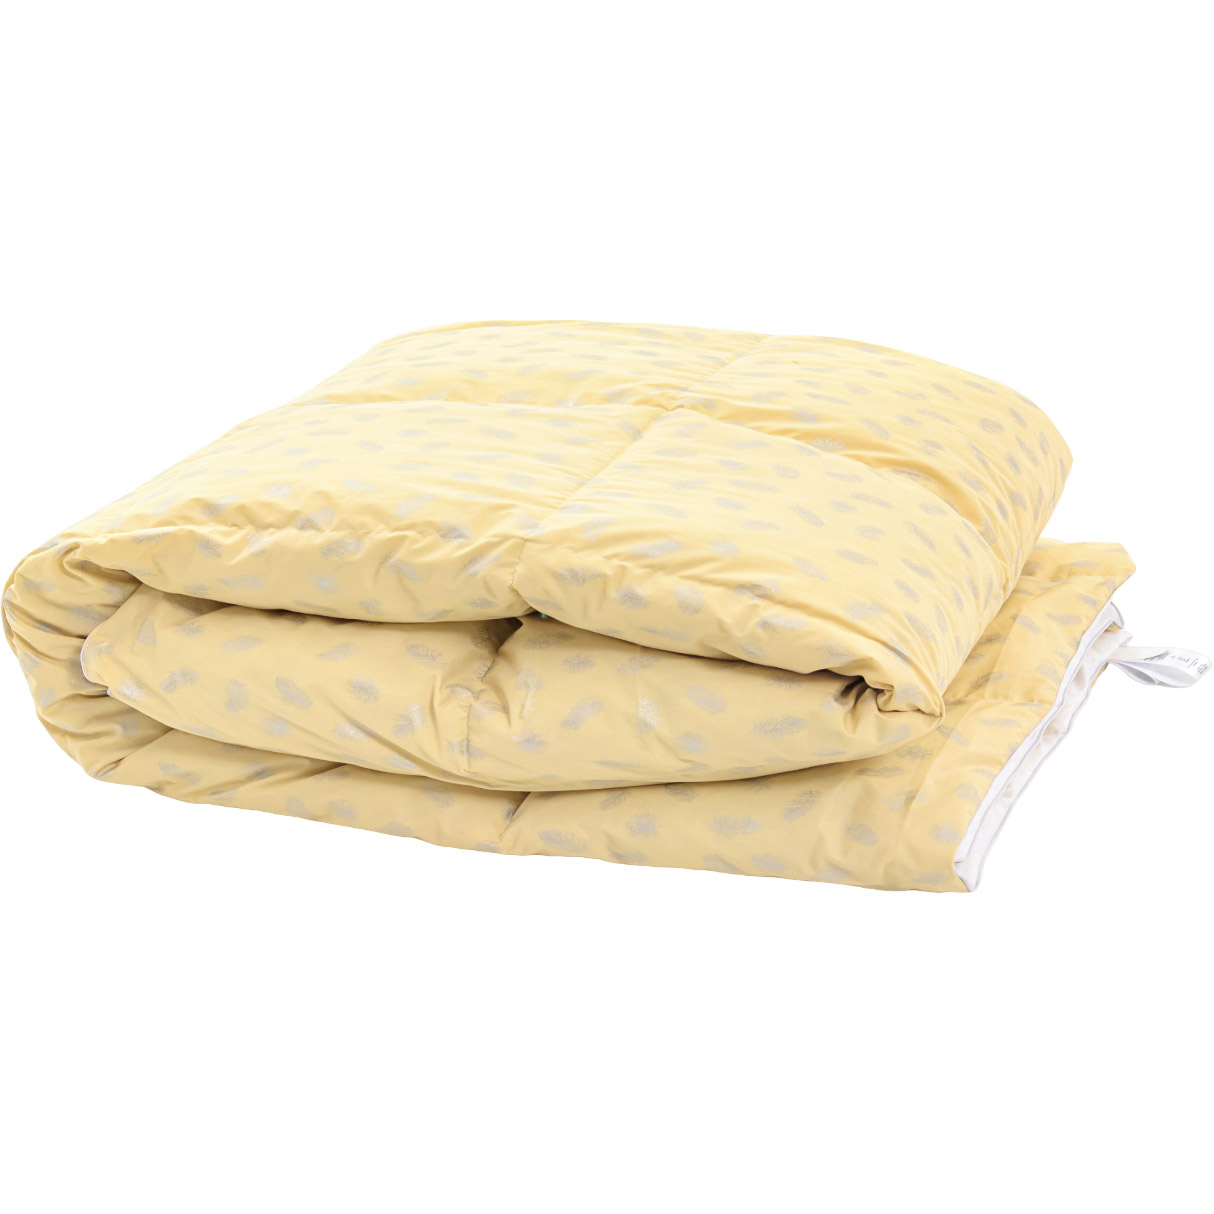 Одеяло пуховое MirSon Karmen №1839 Bio-Beige, 70% пух, 110x140 см, бежевое (2200003013320) - фото 1